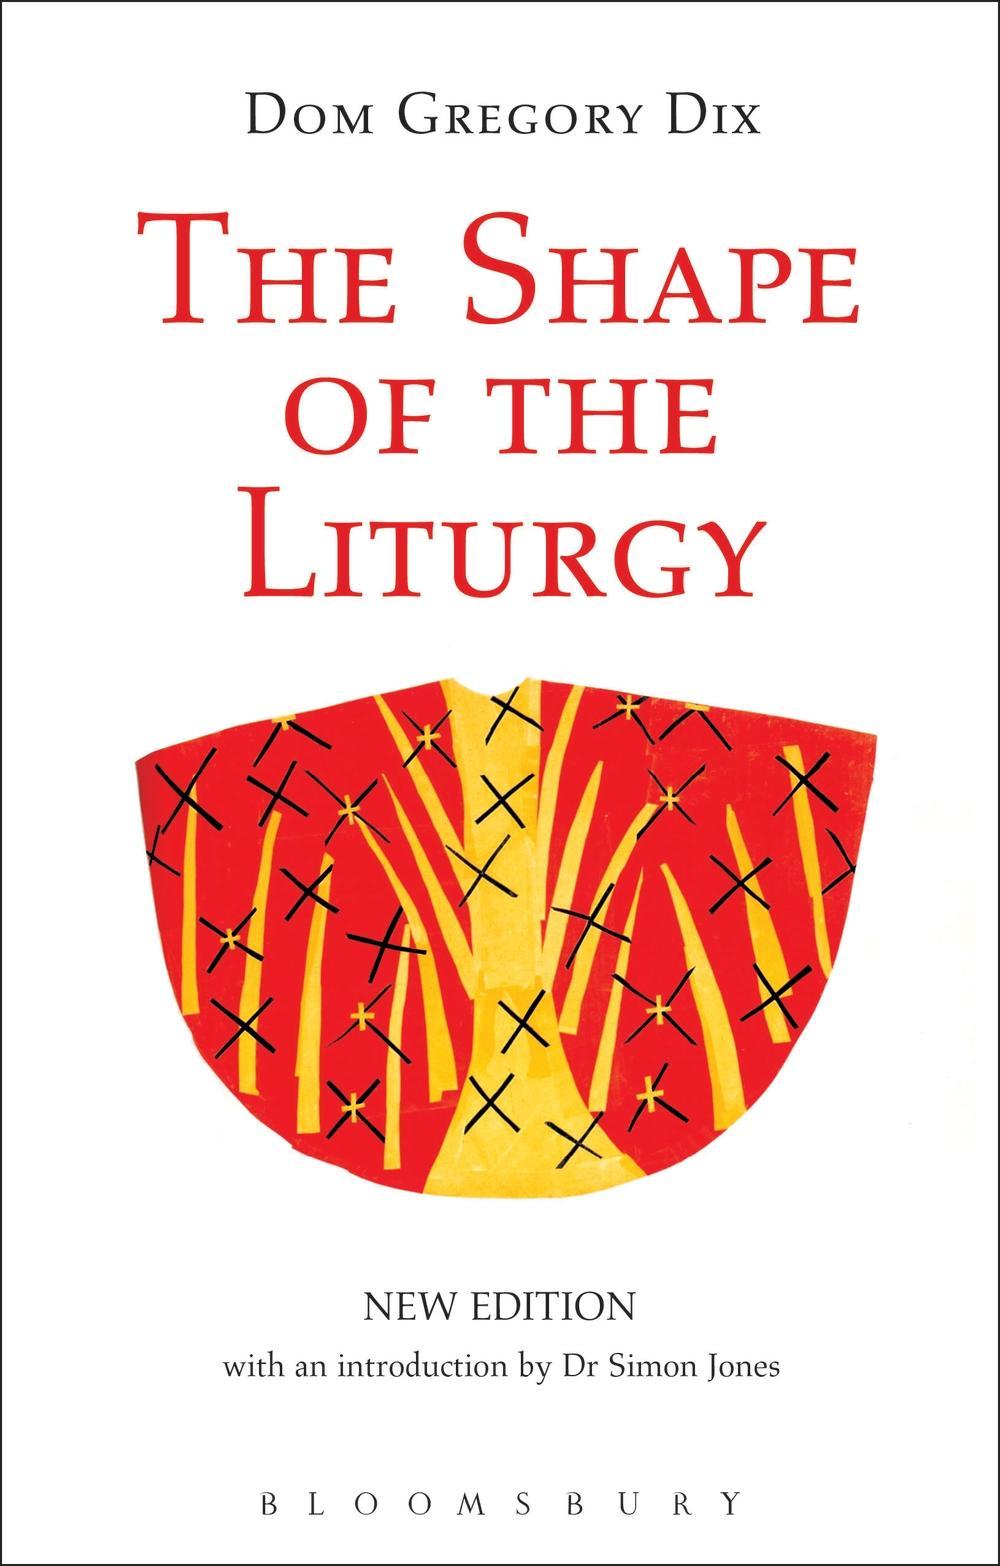 Shape of the Liturgy, New Edition